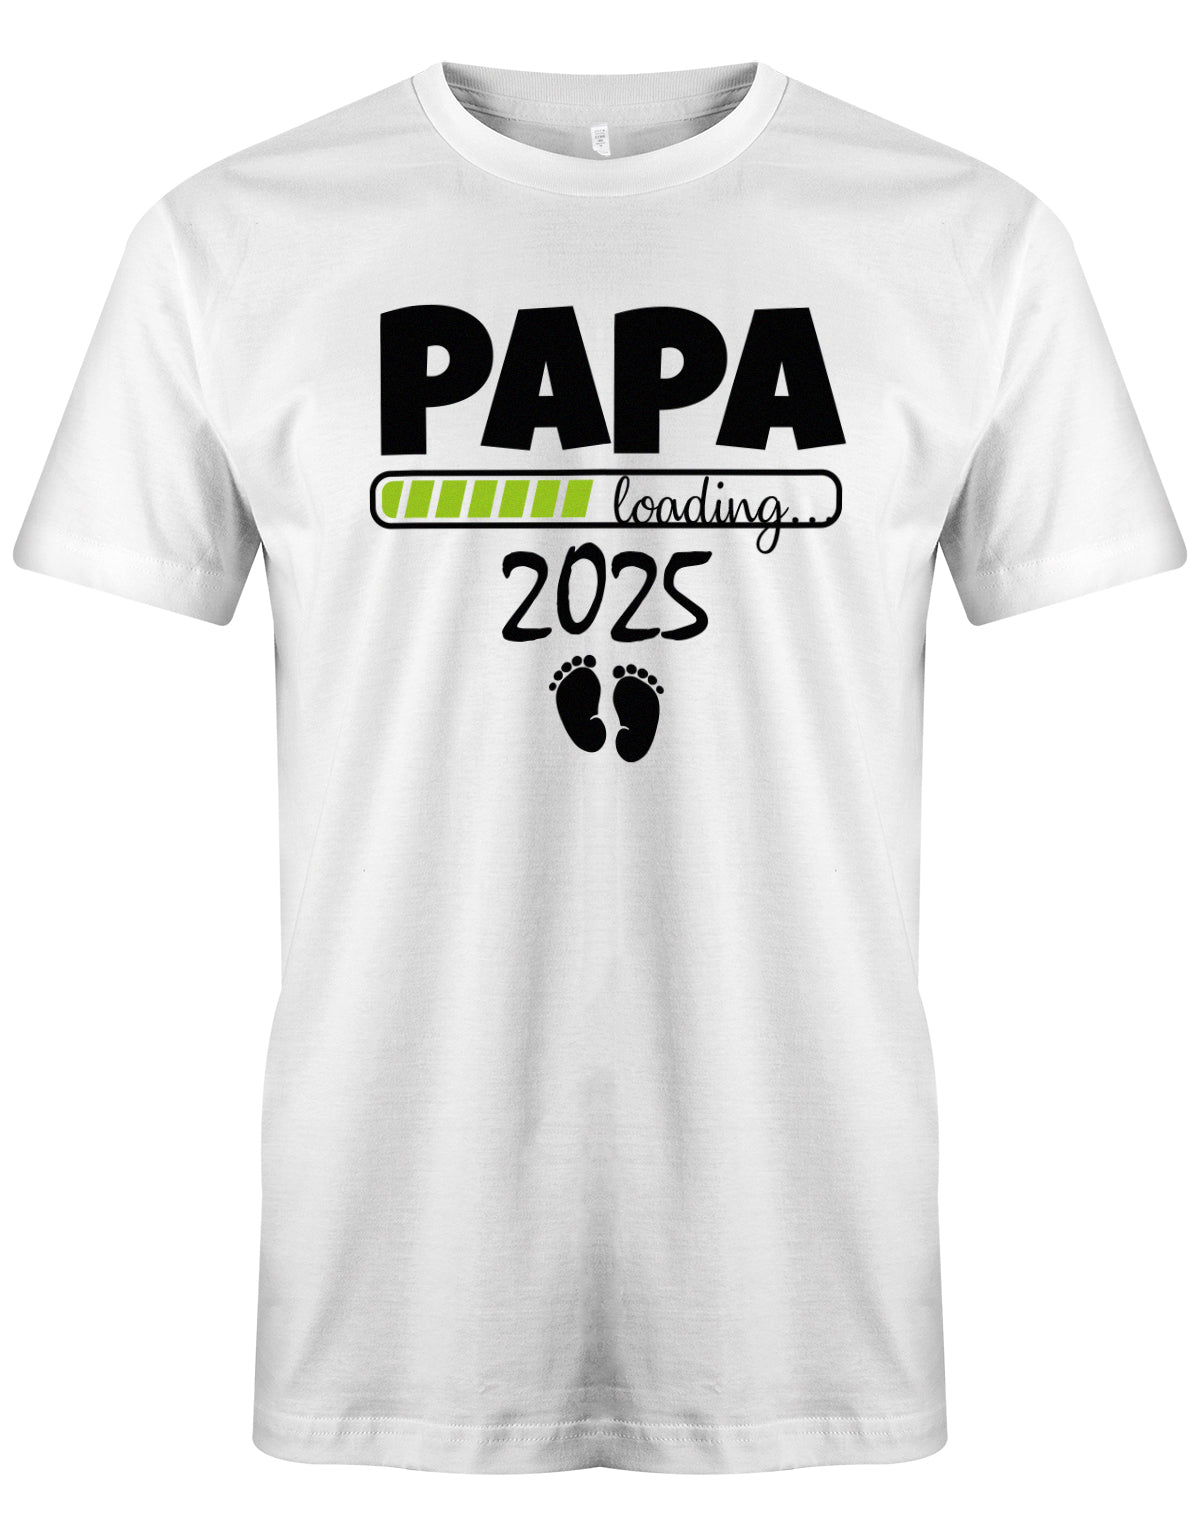 Papa Loading 2025 - Werdender Papa Shirt Herren Weiss